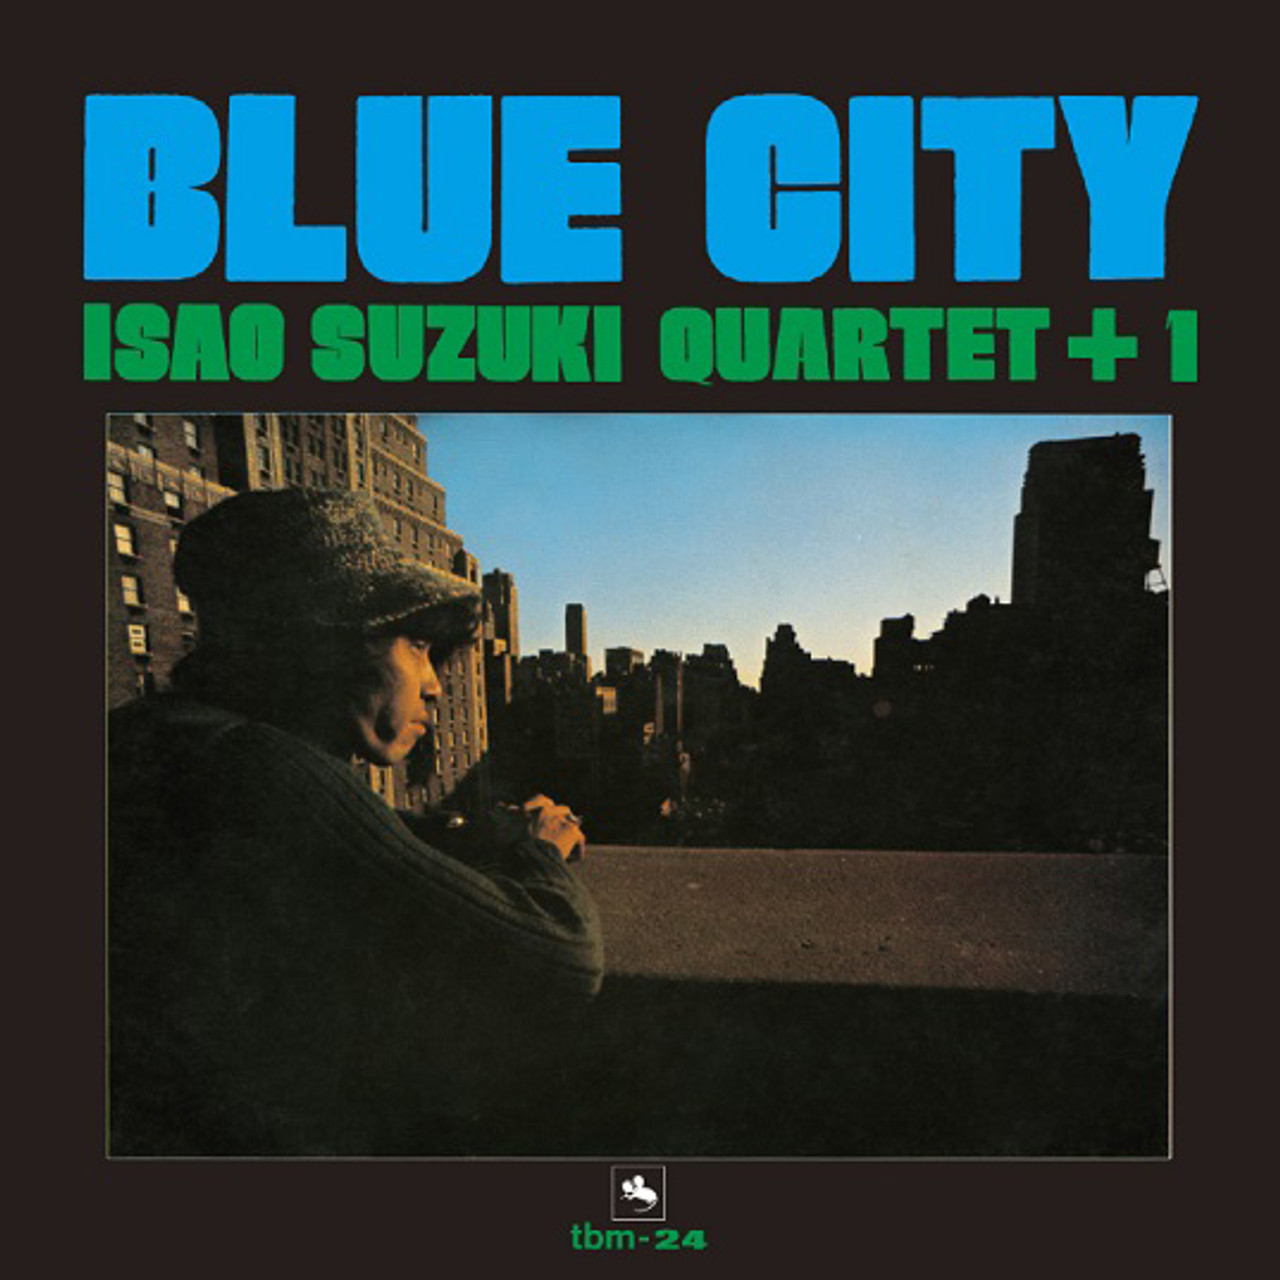 The Isao Suzuki Quartet + 1 Blue City 180g Import LP